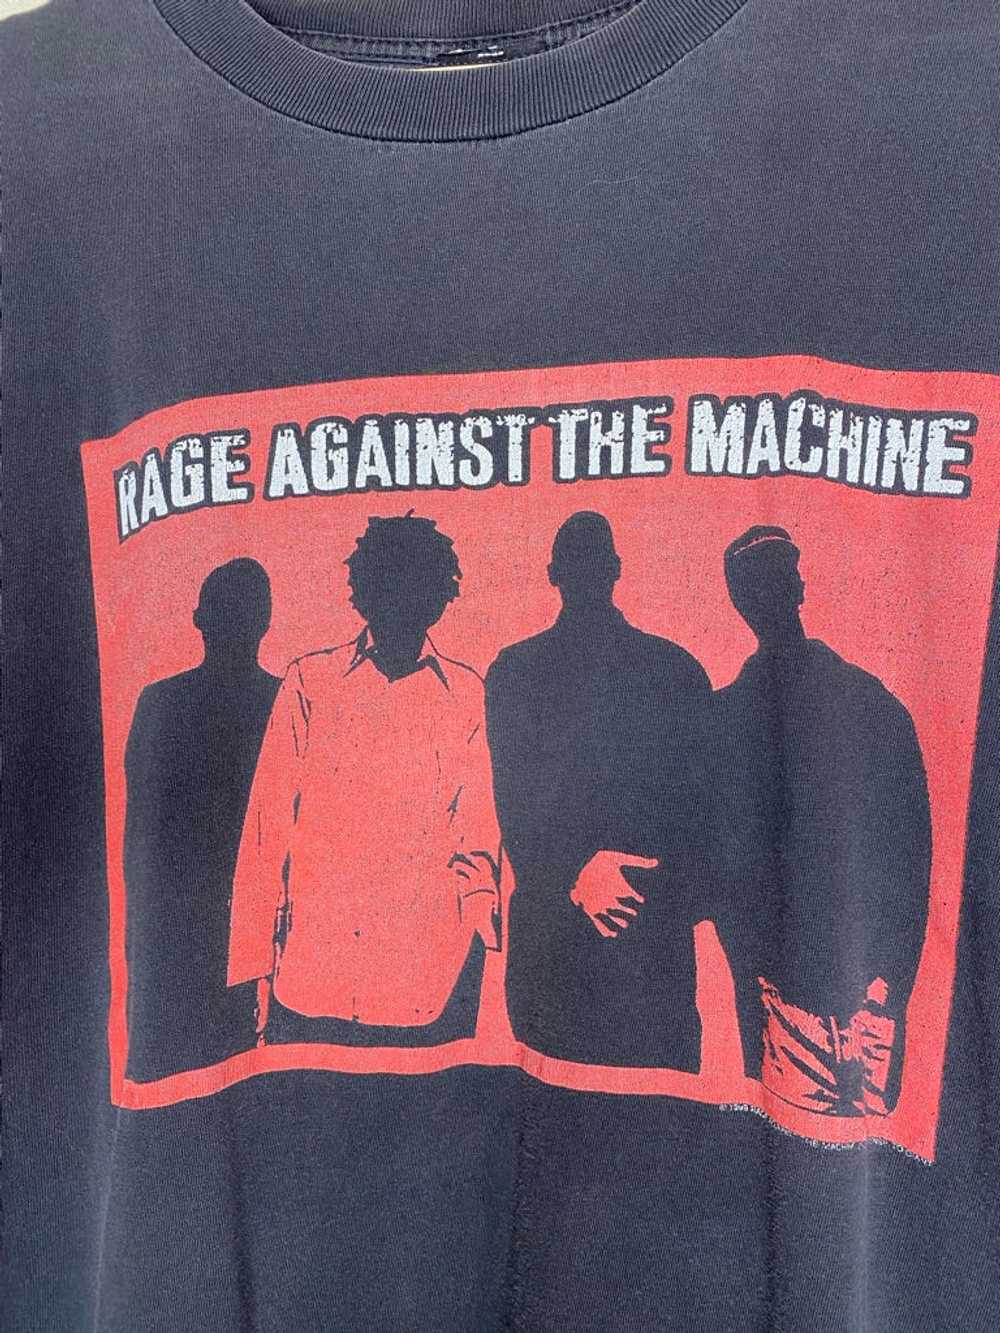 Vintage Rage Against the Machine Band T-Shirt: XL - image 2